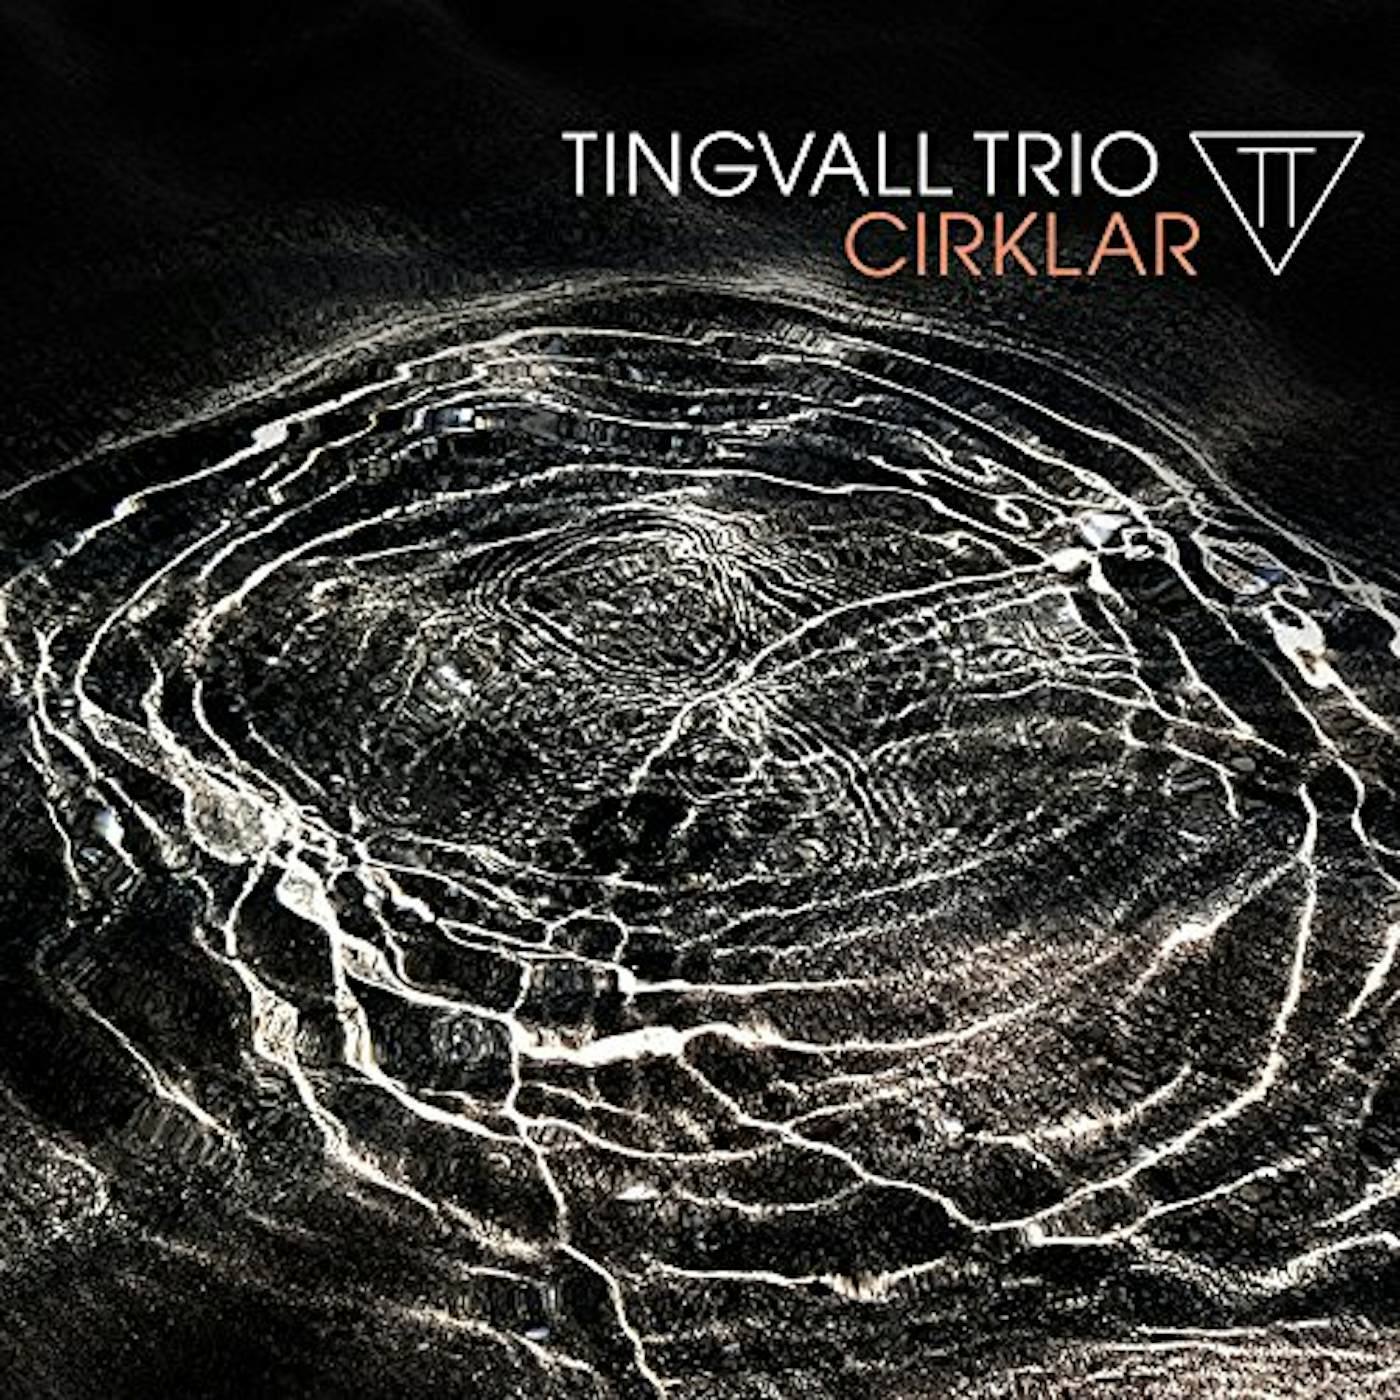 Tingvall Trio Cirklar Vinyl Record